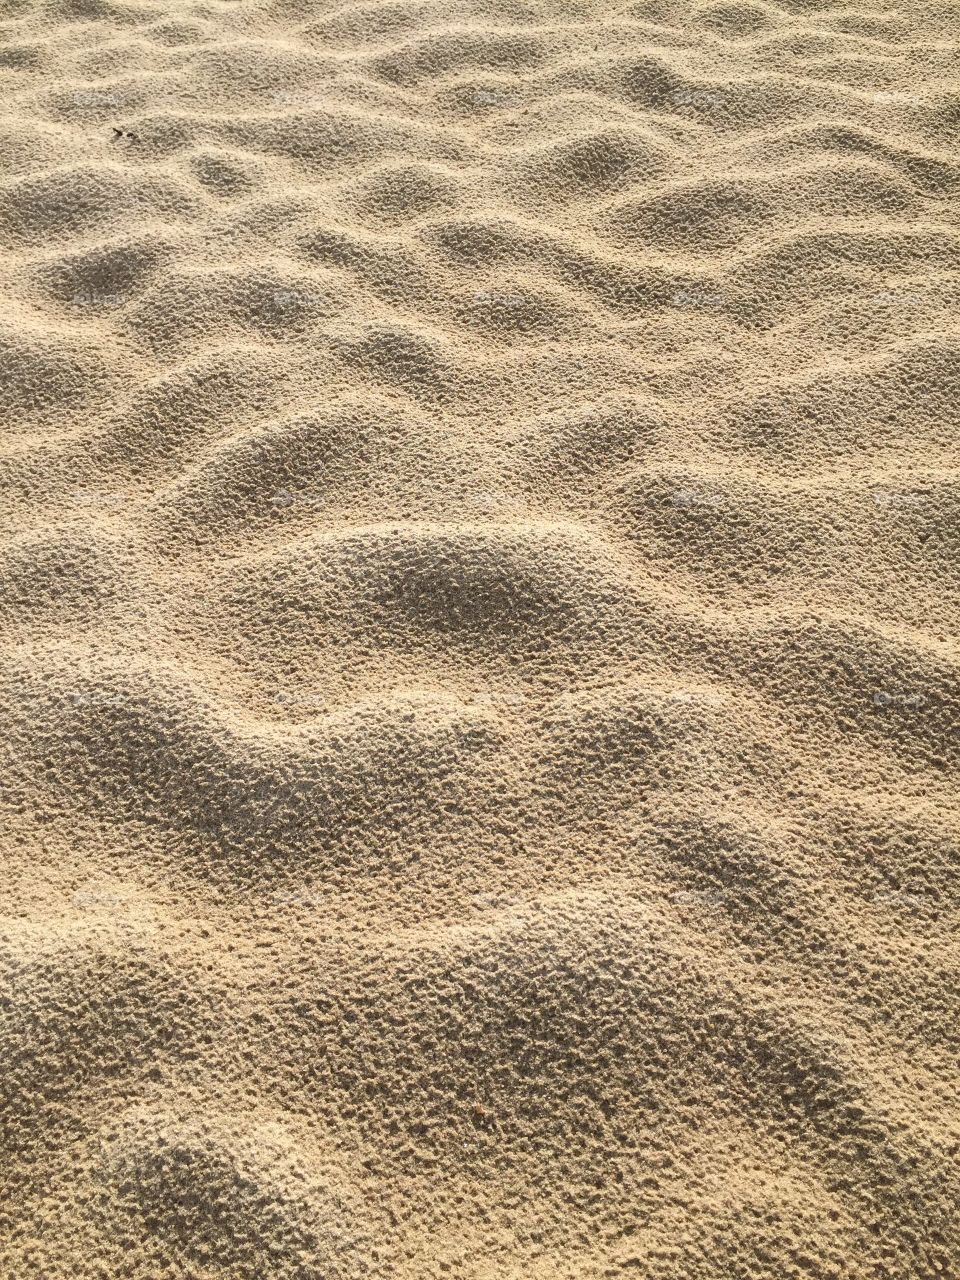 Beach pattern
